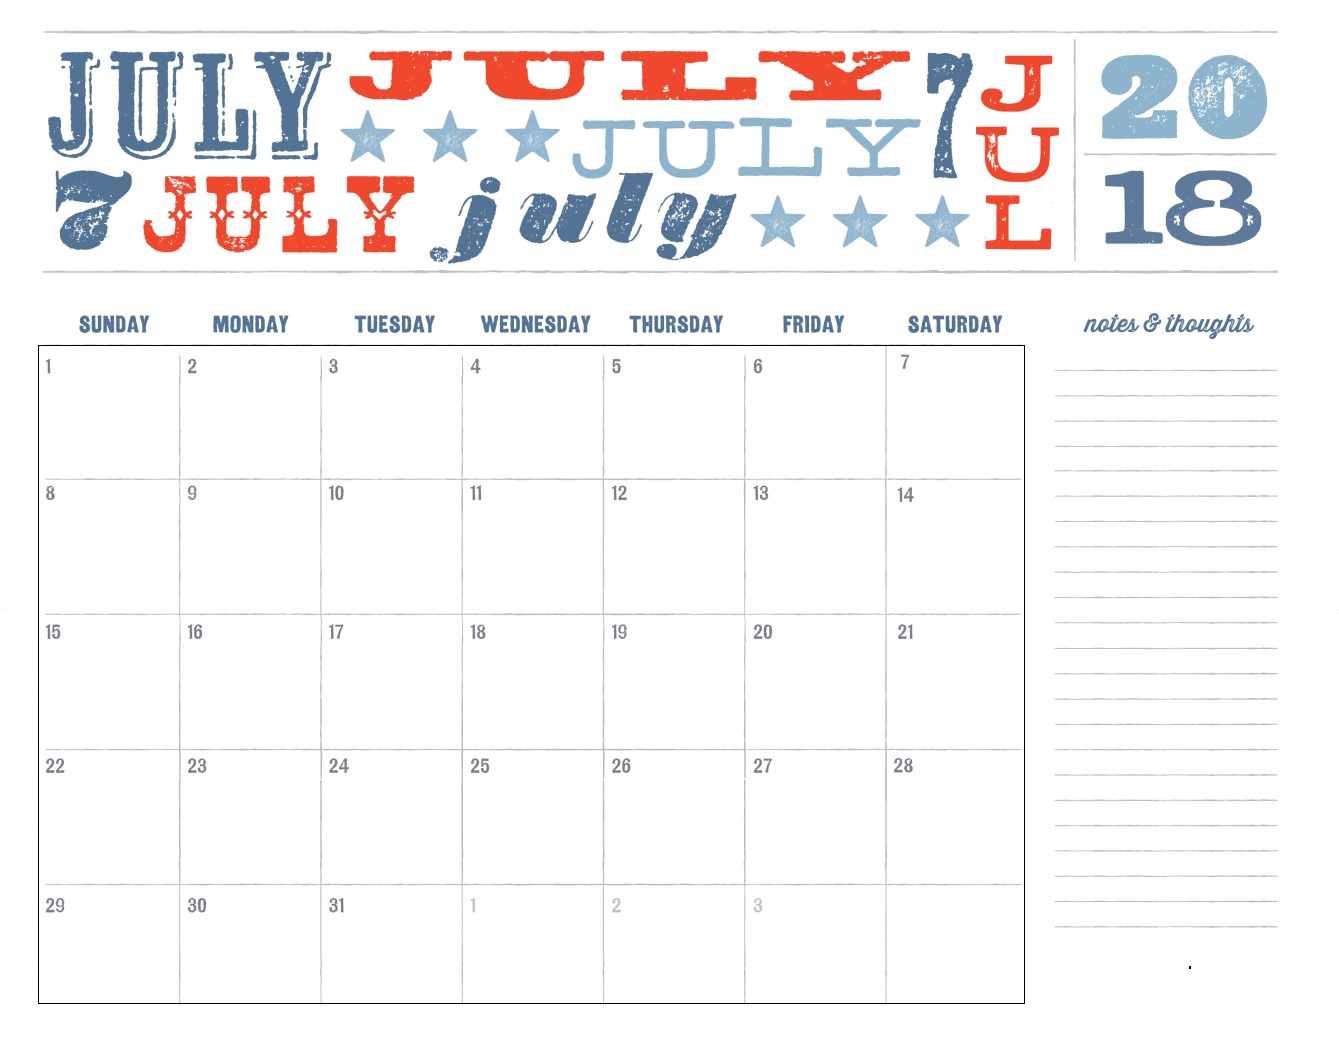 july-2018-colorful-calendar-for-office-desk-calendar-2018-calendar